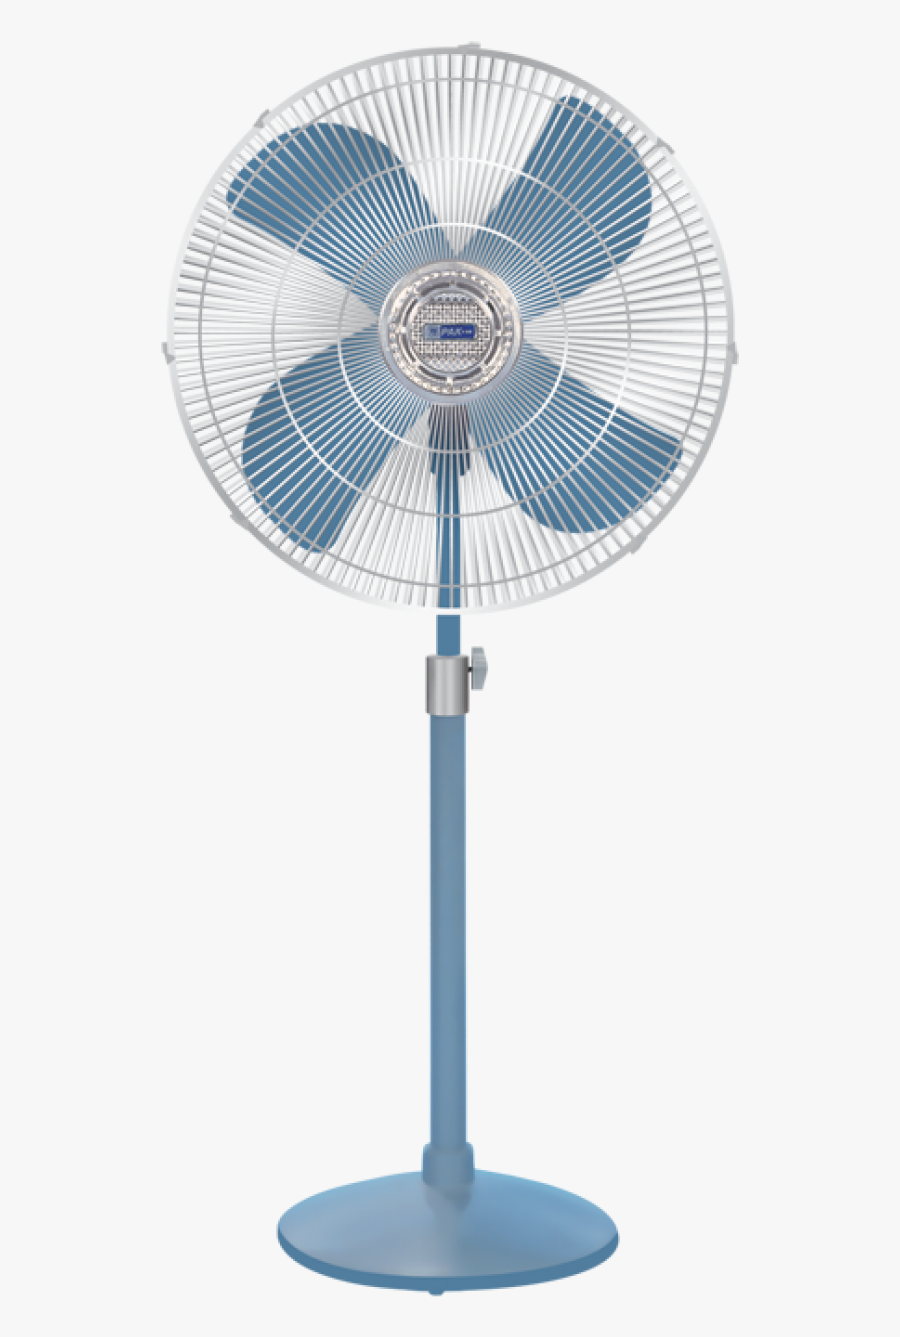 Blue Table Fan Png Image - Royal Fan Price In Pakistan 2019, Transparent Clipart